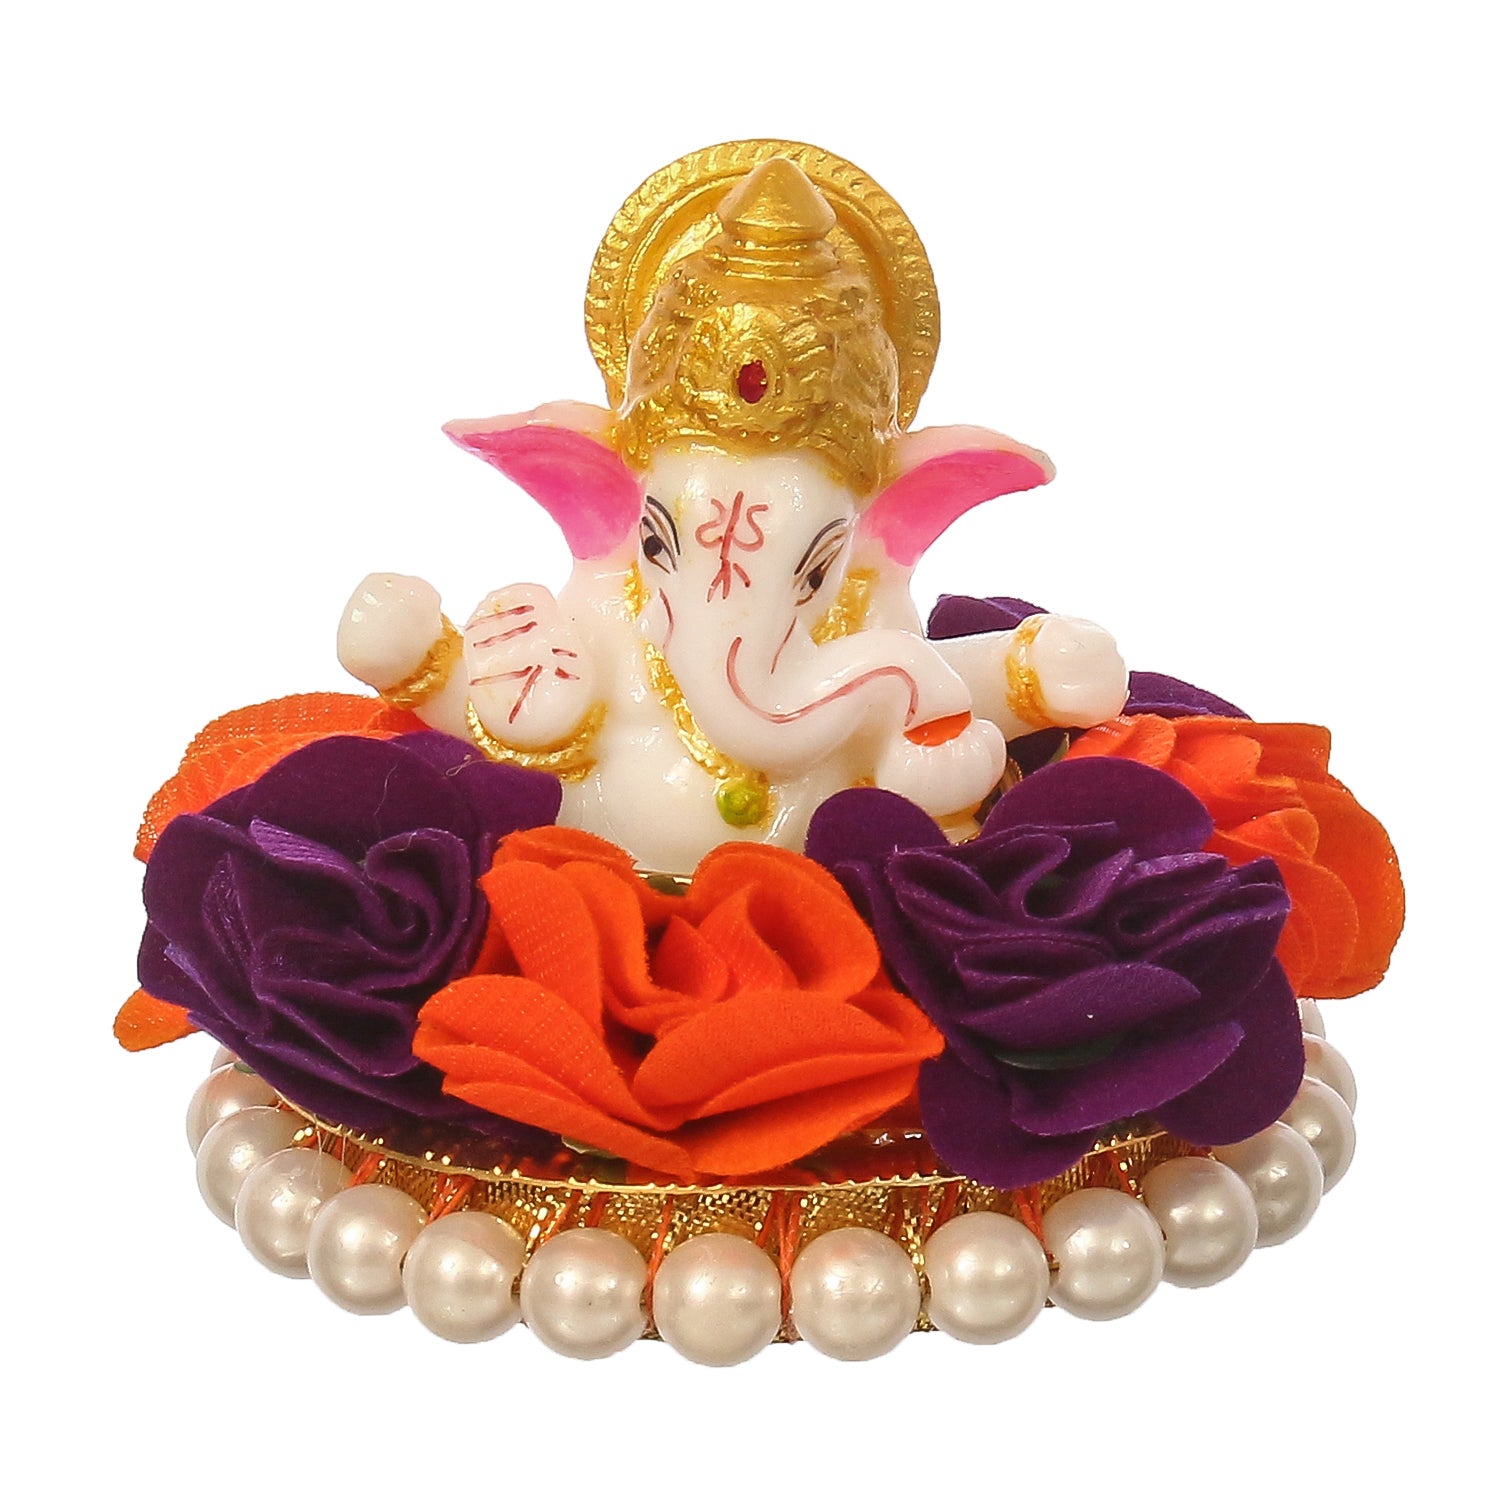 Lord Ganesha Idol On Decorative Handcrafted Orange And Purple Flowers Plate 2